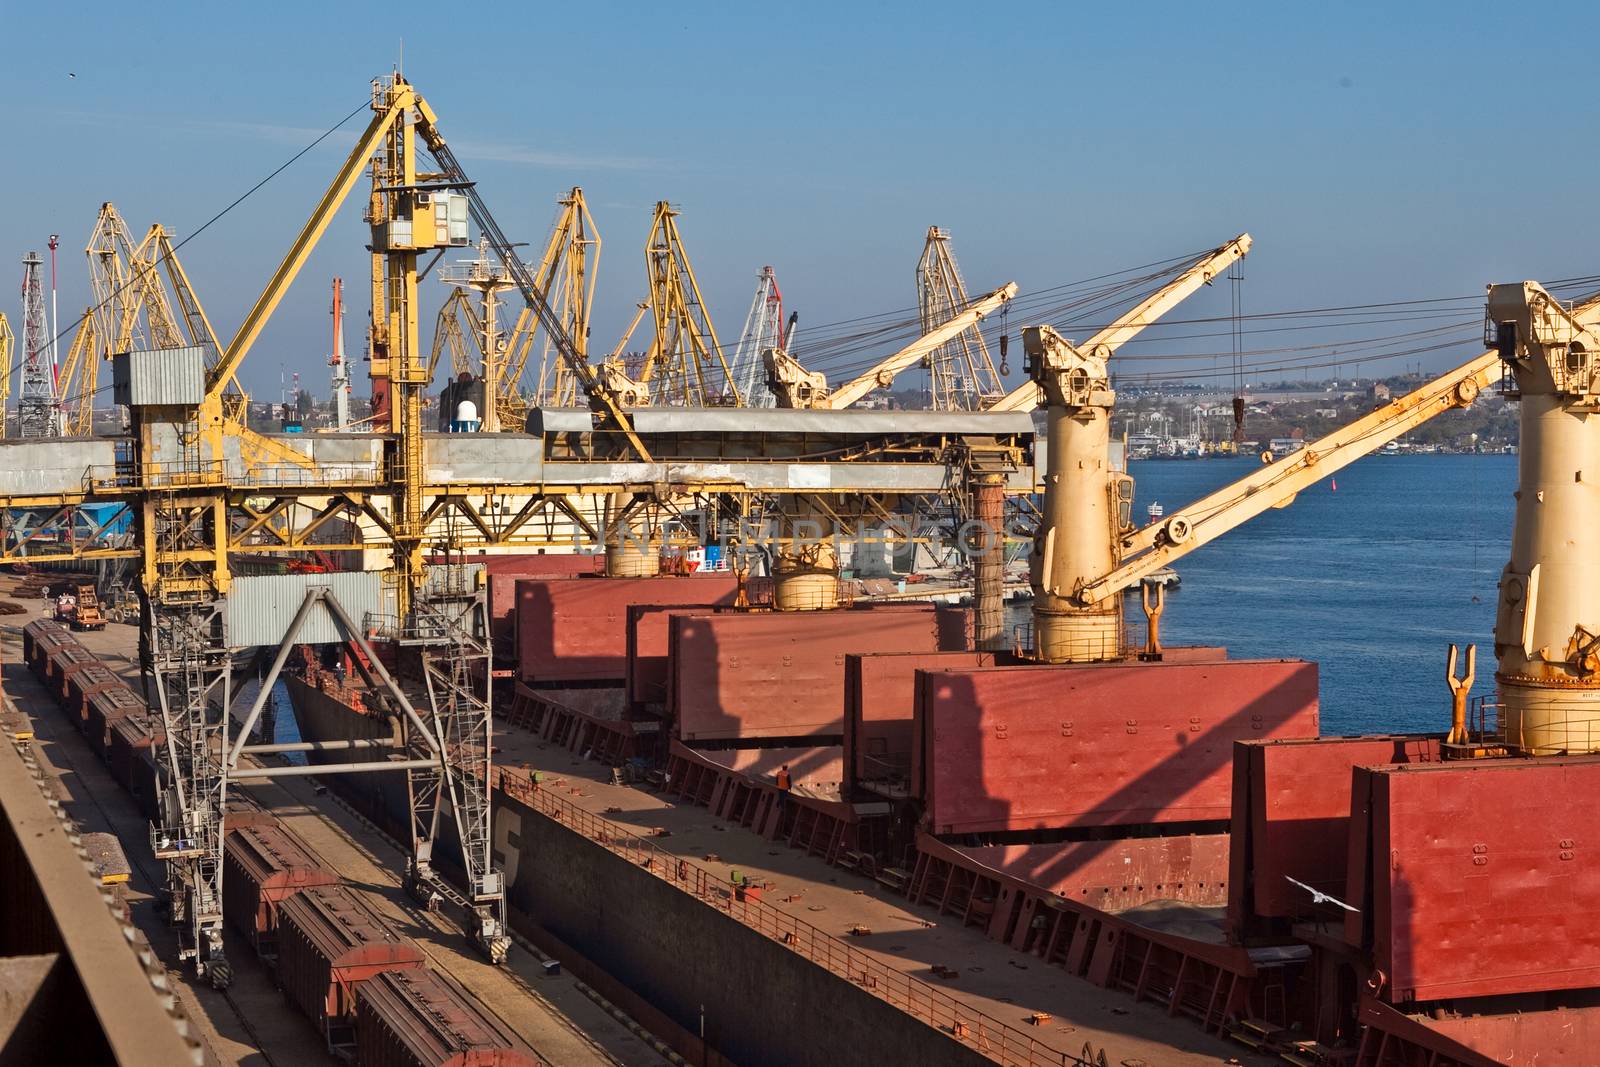 Grain from silos being loaded onto cargo ship on conveyor belt by sarymsakov